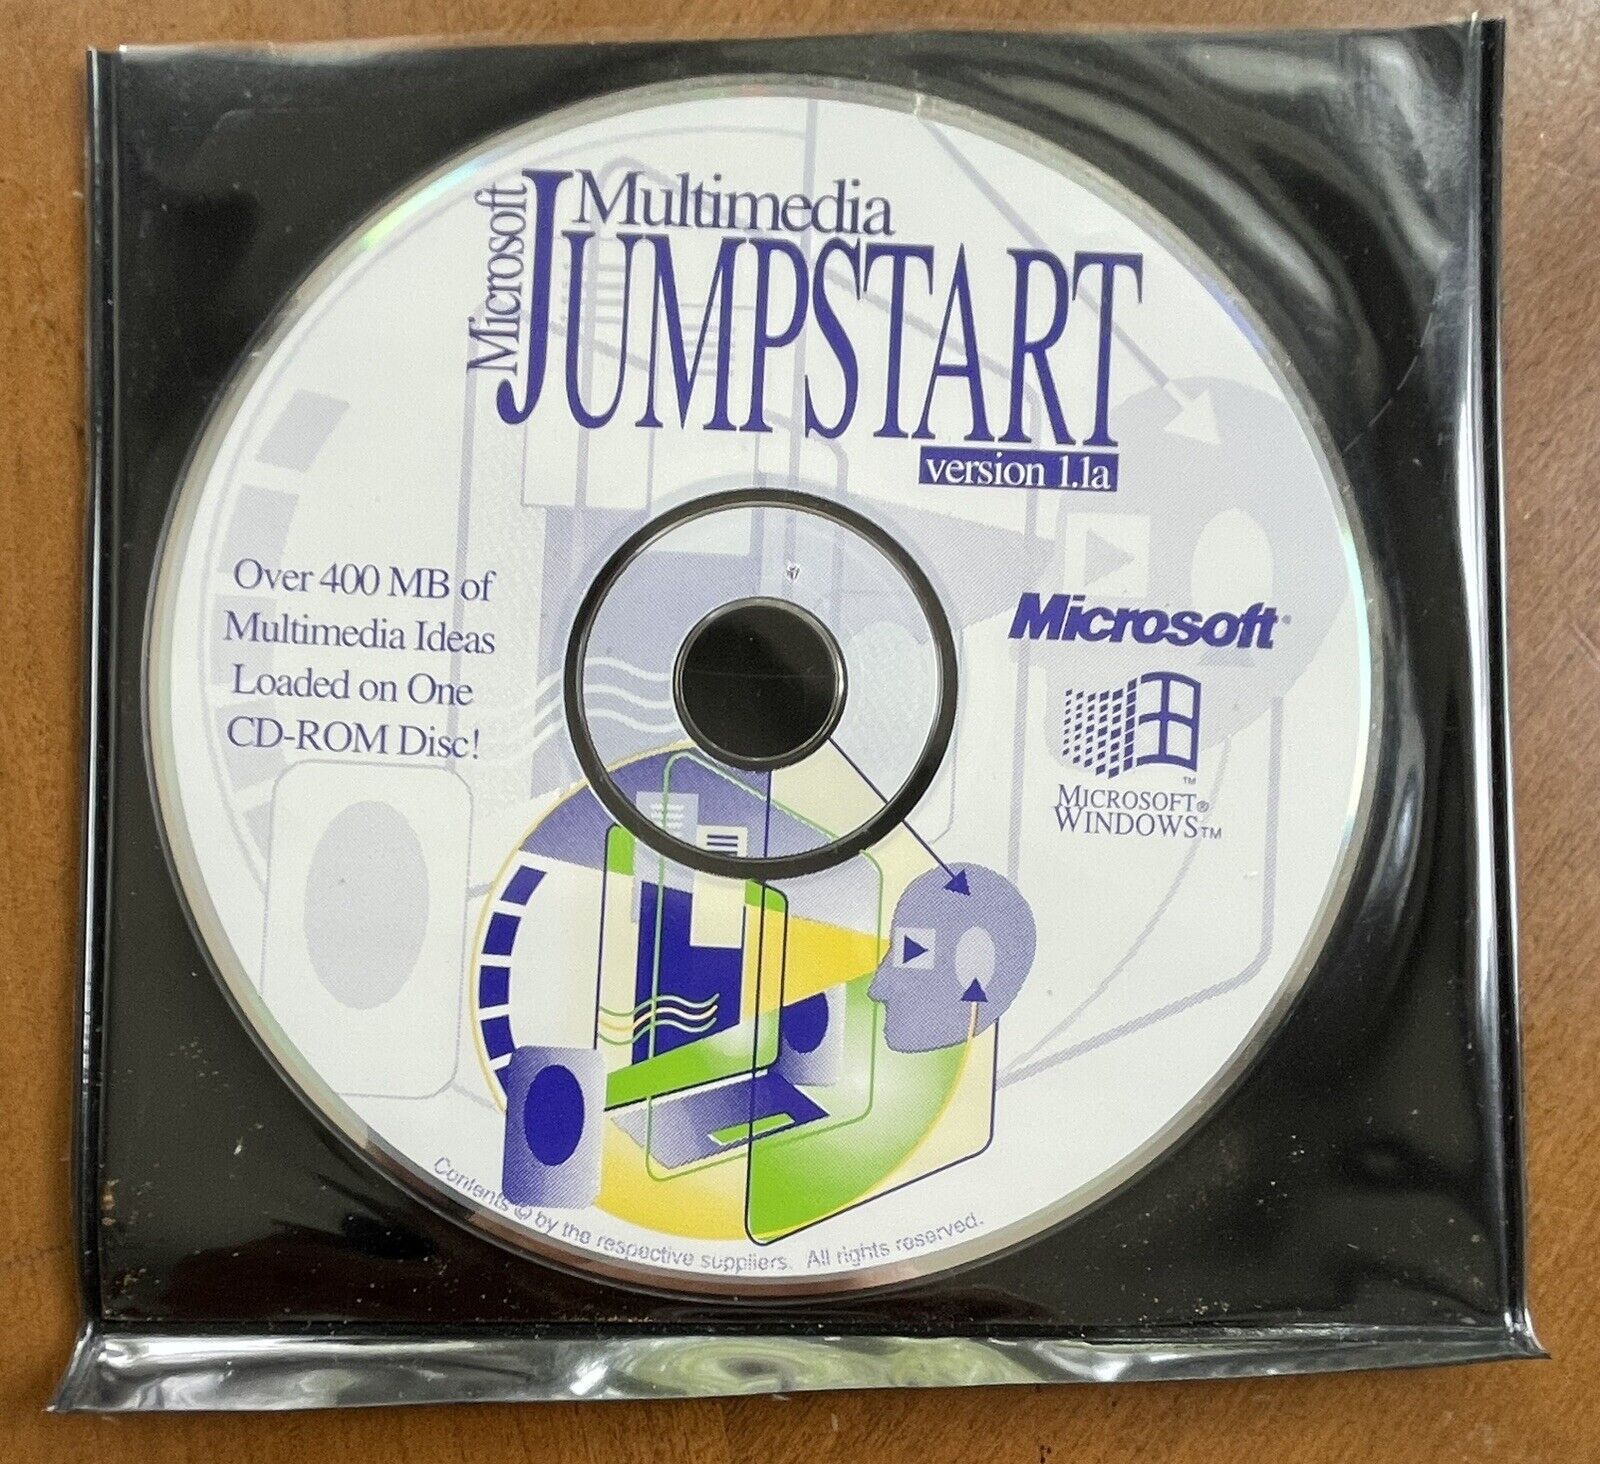 Vintage 1994 Microsoft Multimedia Jumpstart - Version 1.1a